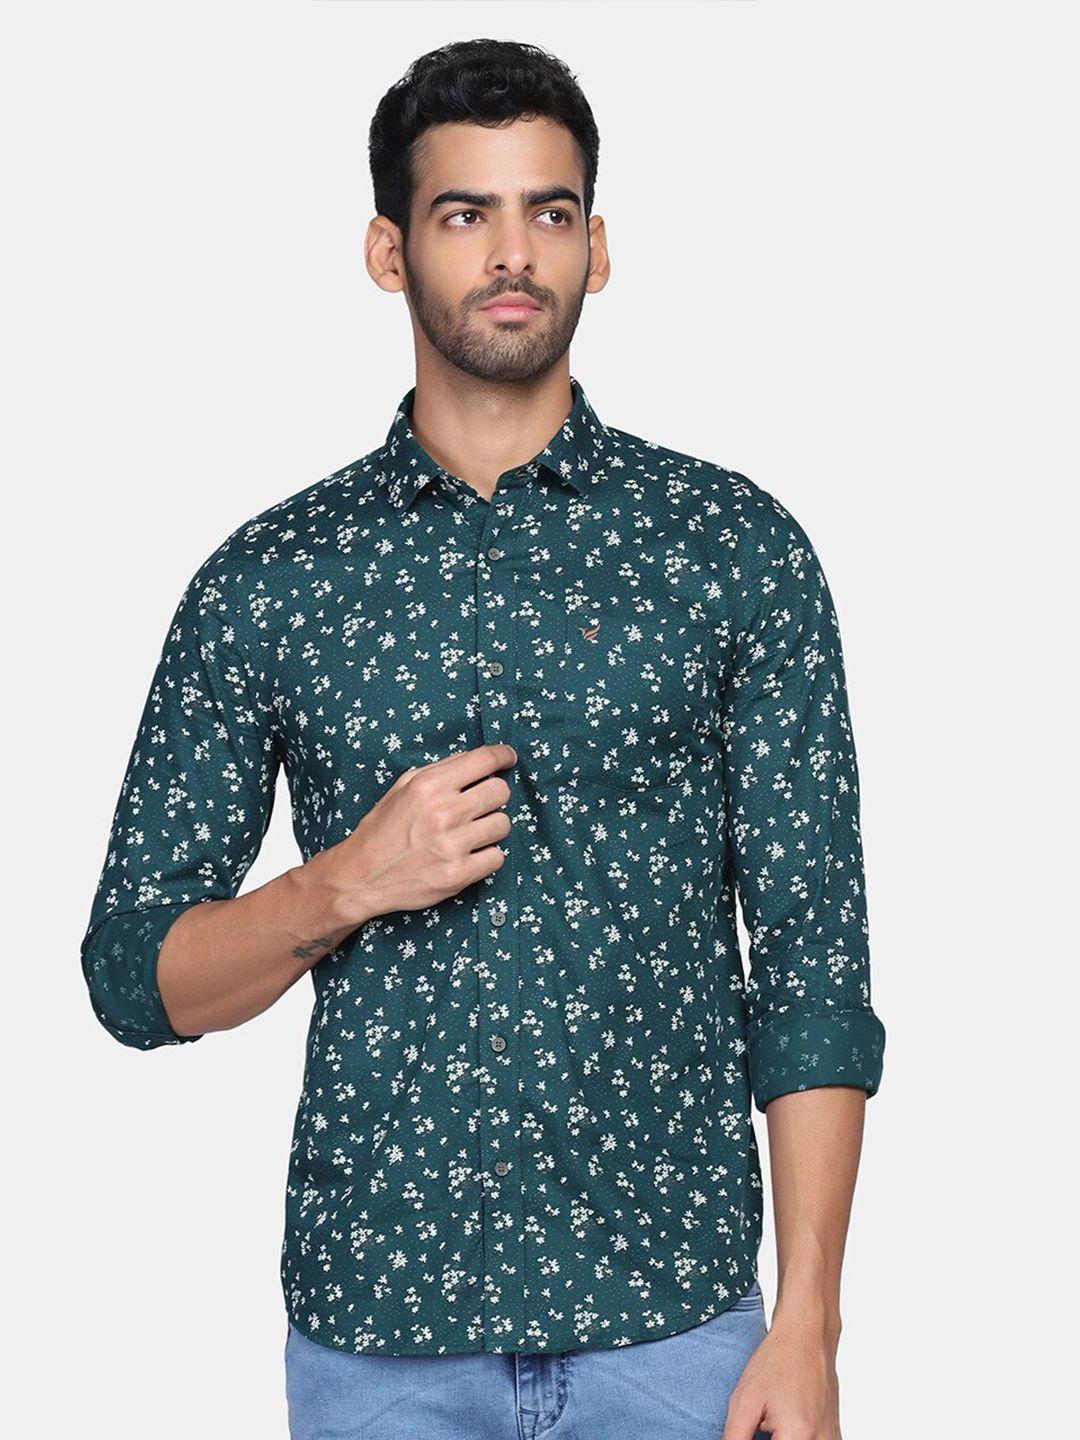 blackberrys men olive green slim fit floral printed casual cotton shirt